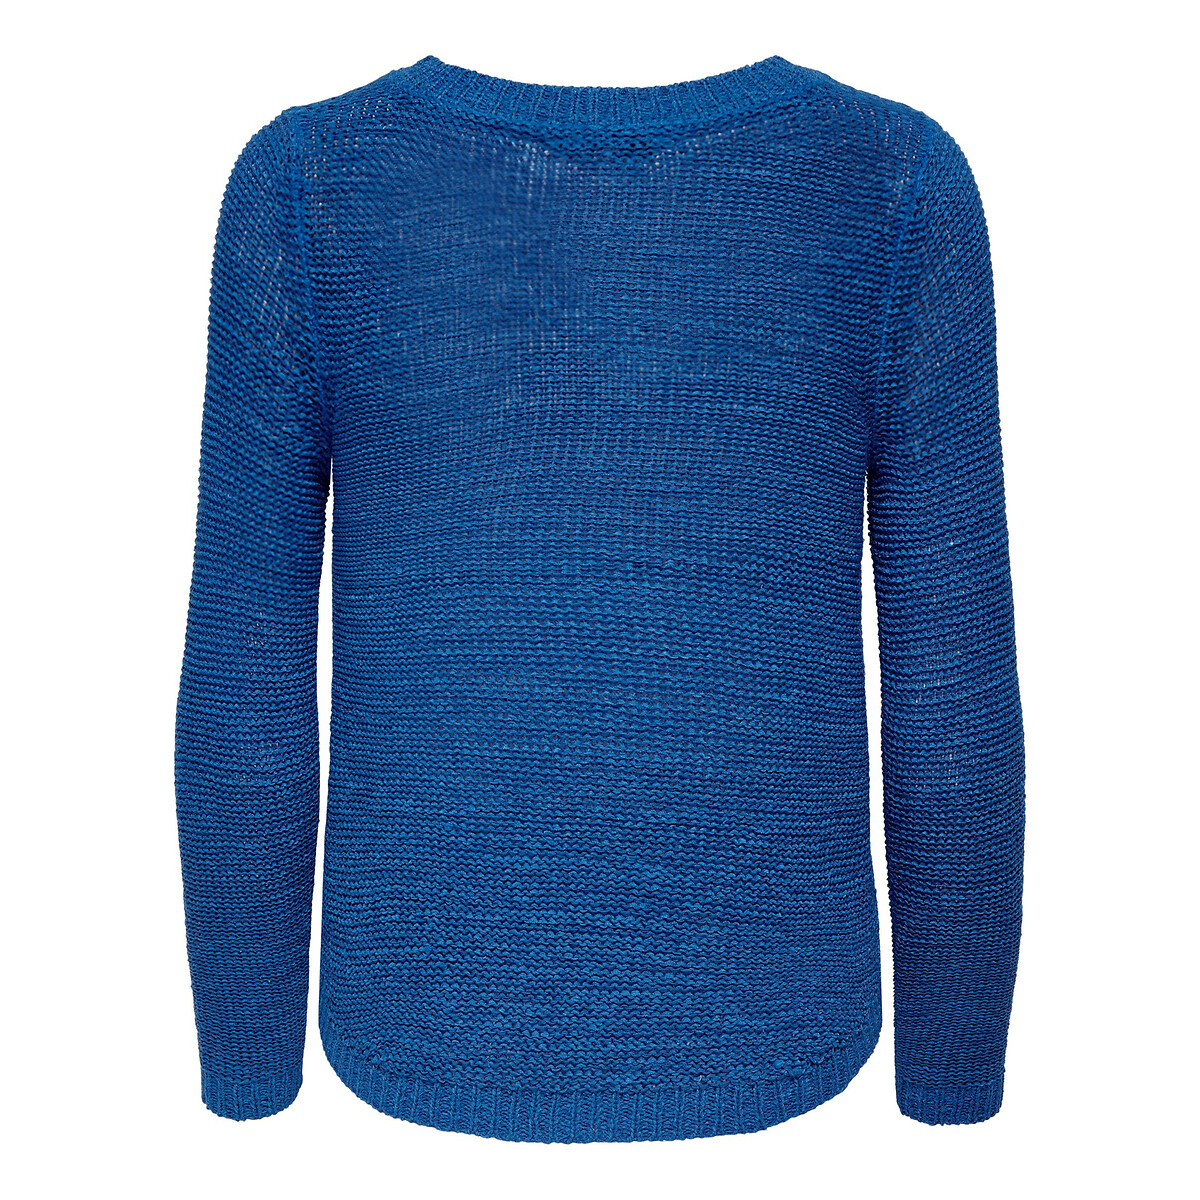 Пуловер С вырезом-лодочкой из тонкого трикотажа XXL синий LaRedoute, размер XXL - фото 5